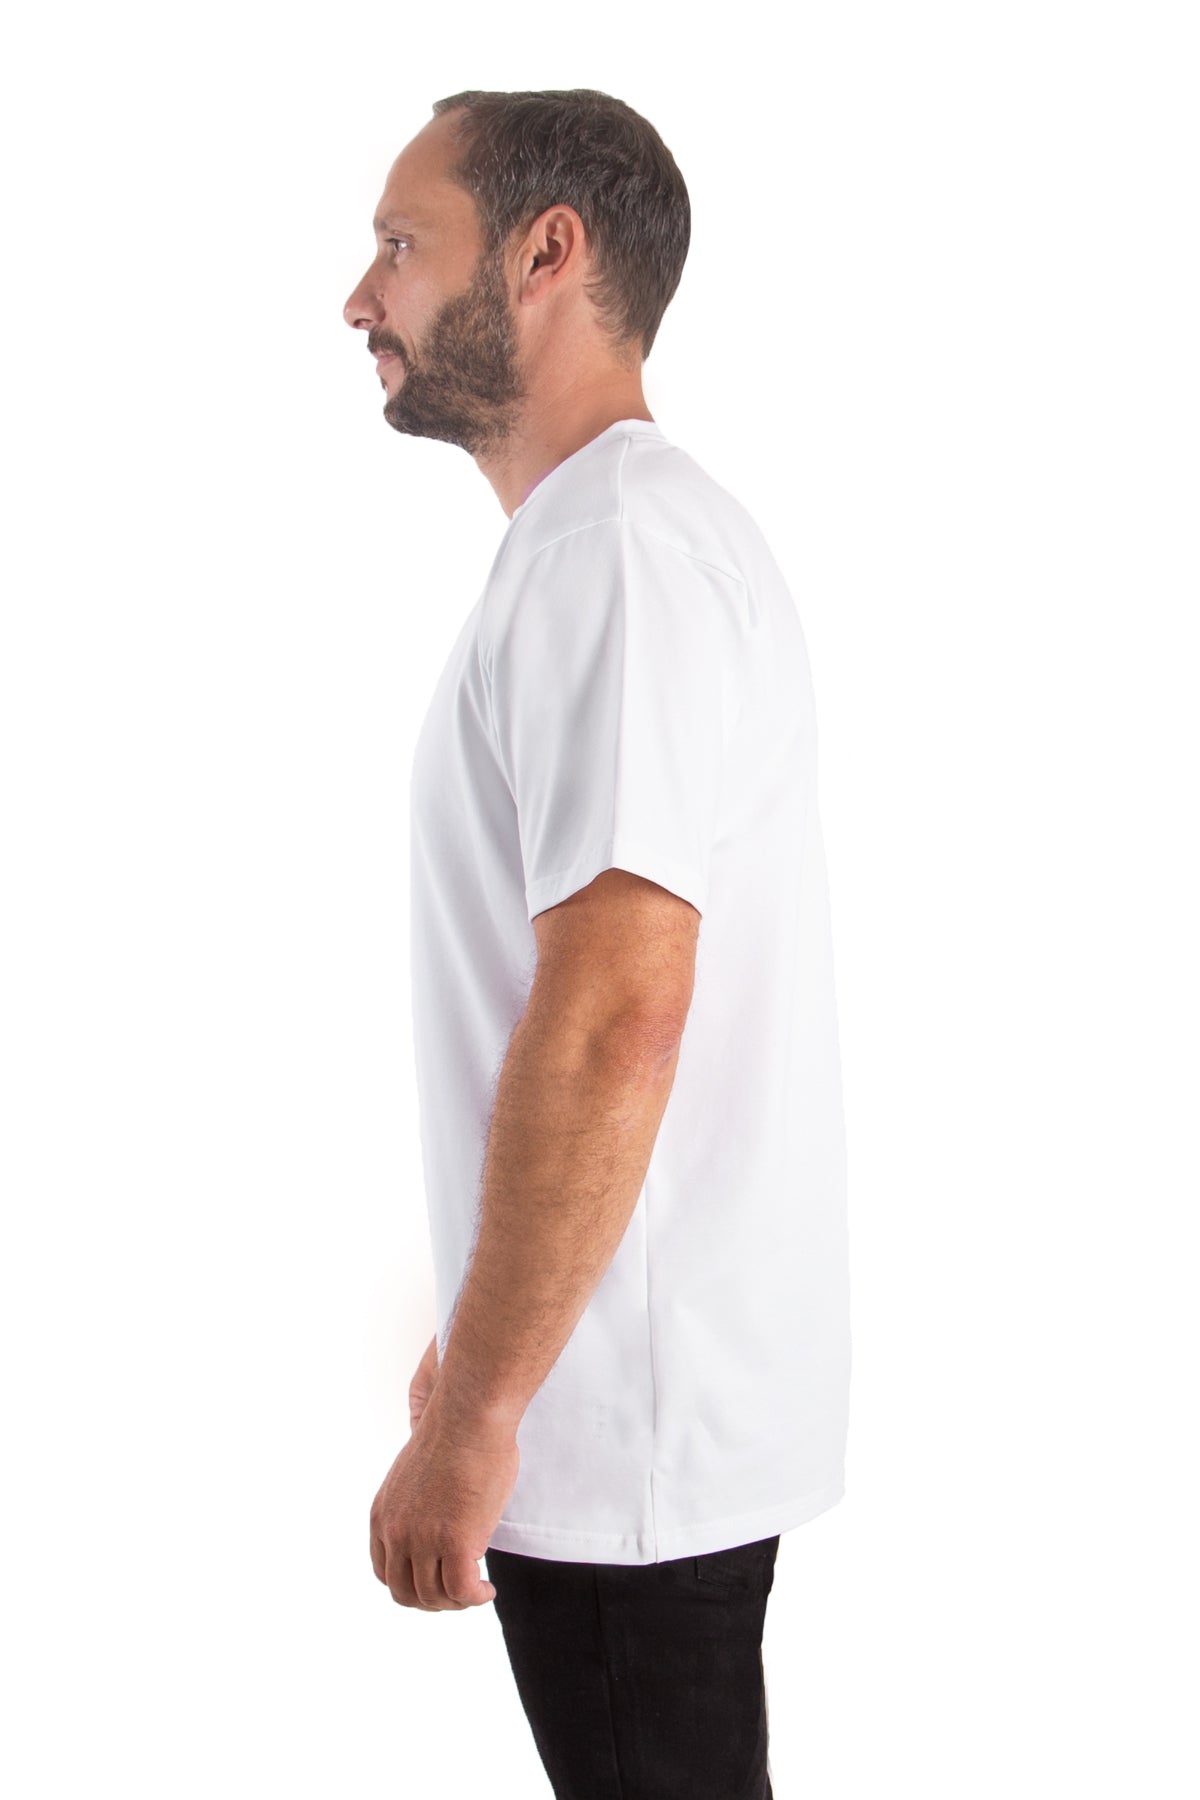 T-Shirt Rundhals (10er-Pack) - bordeaux